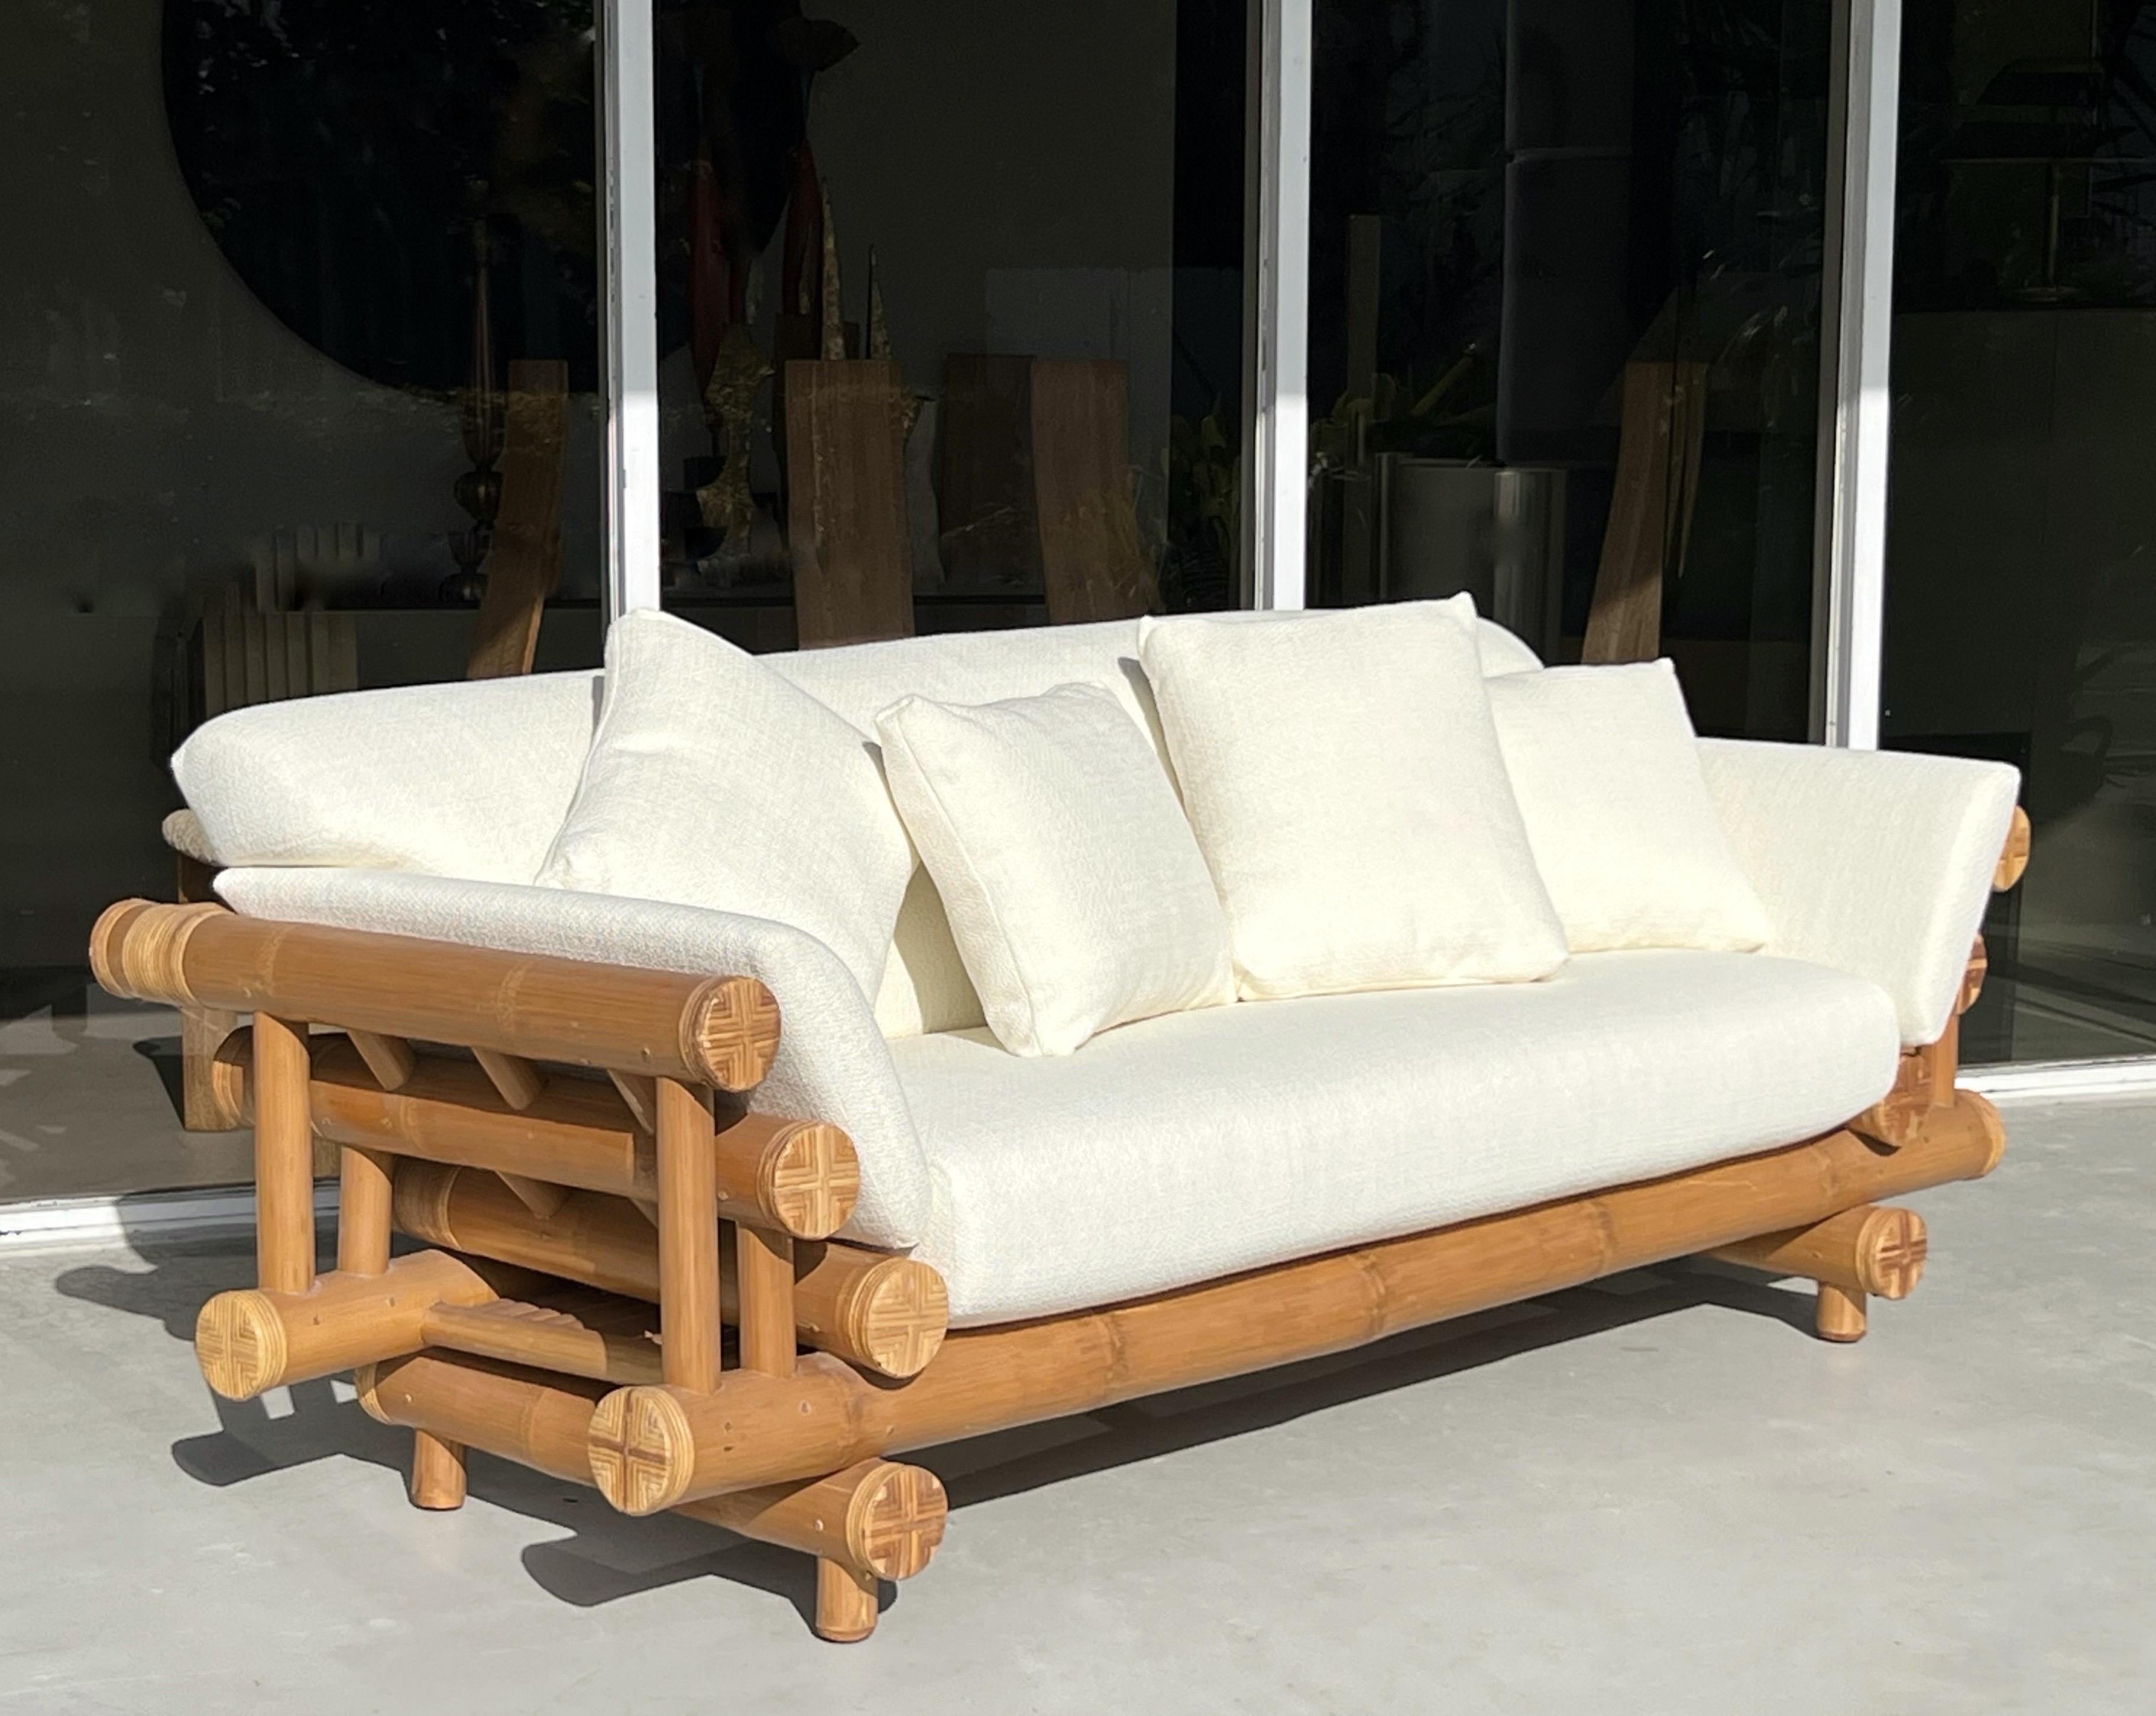 Skulpturales Bambus-Rattan-Sofa, 1970er Jahre im Angebot 1